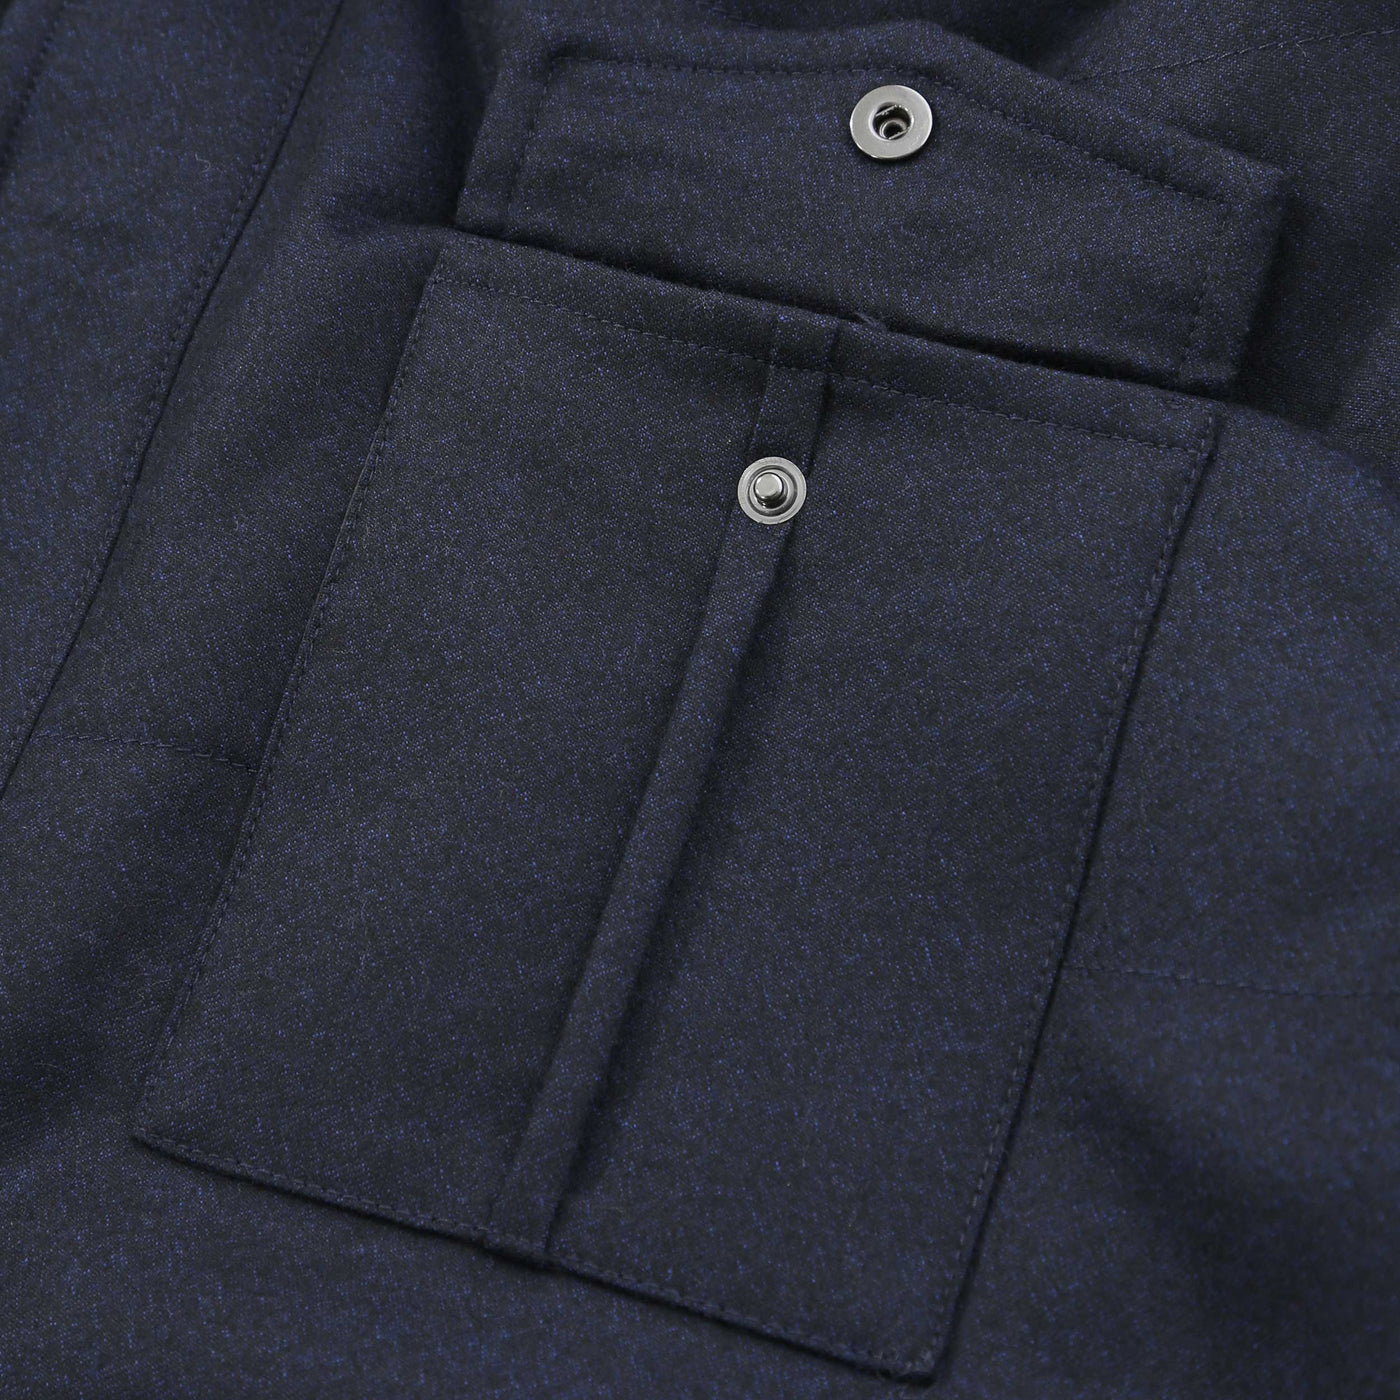 Canali Wool Flannel Jacket in Navy Pocket Detail